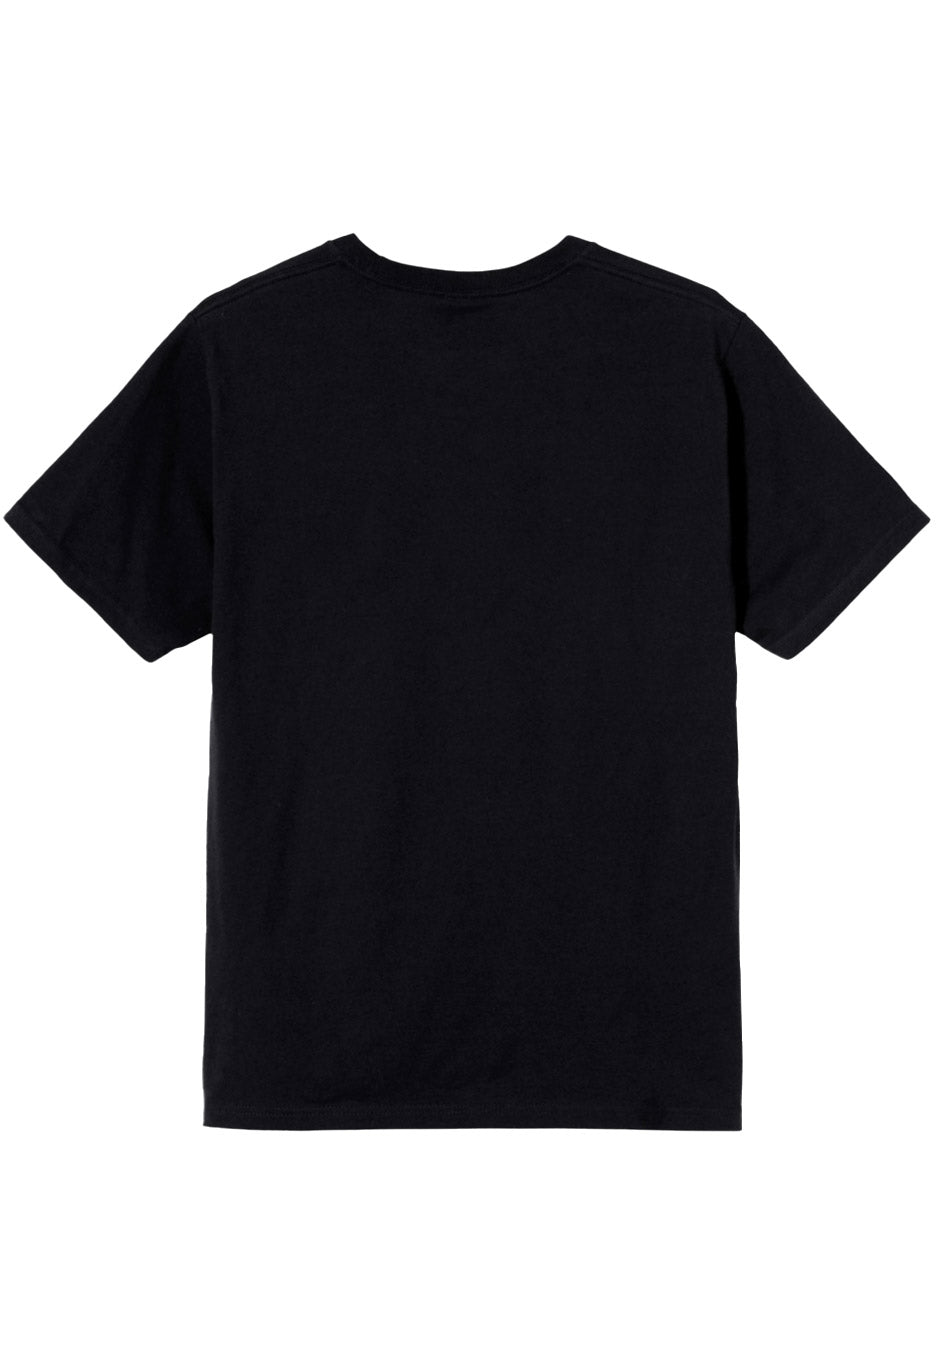 Benediction - Stormcrow - T-Shirt